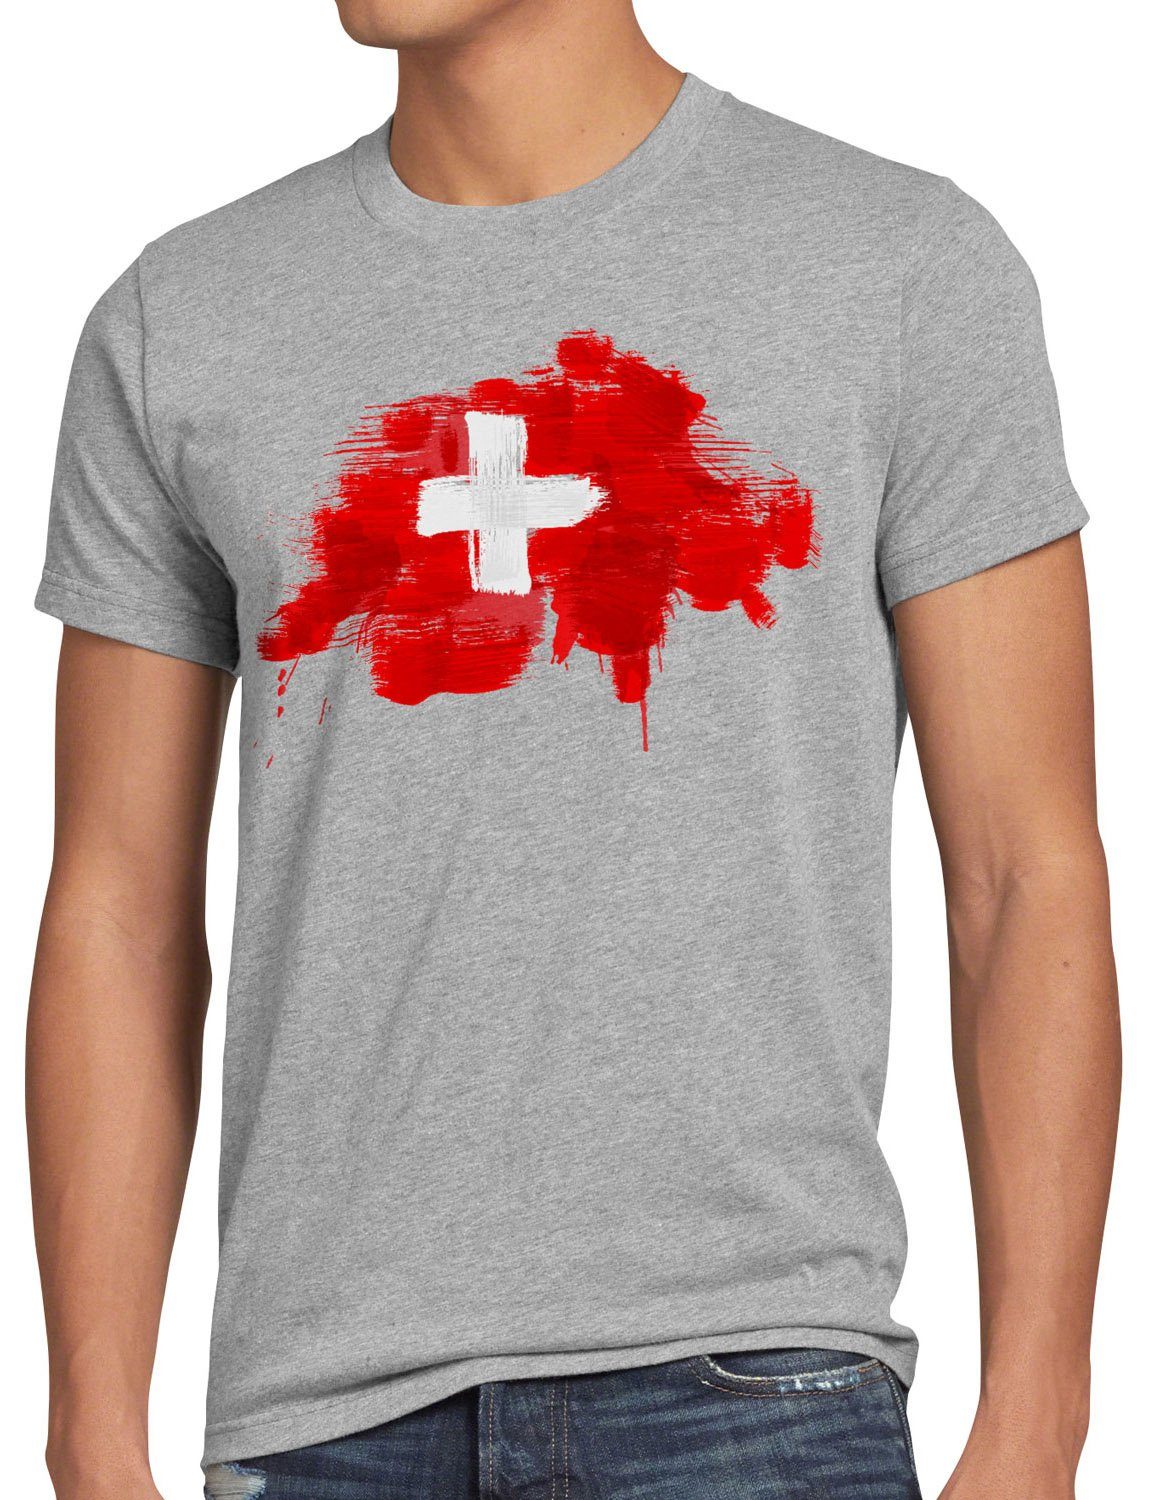 Fahne WM EM style3 Print-Shirt Flagge grau Schweiz Sport T-Shirt Herren Fußball Suisse meliert